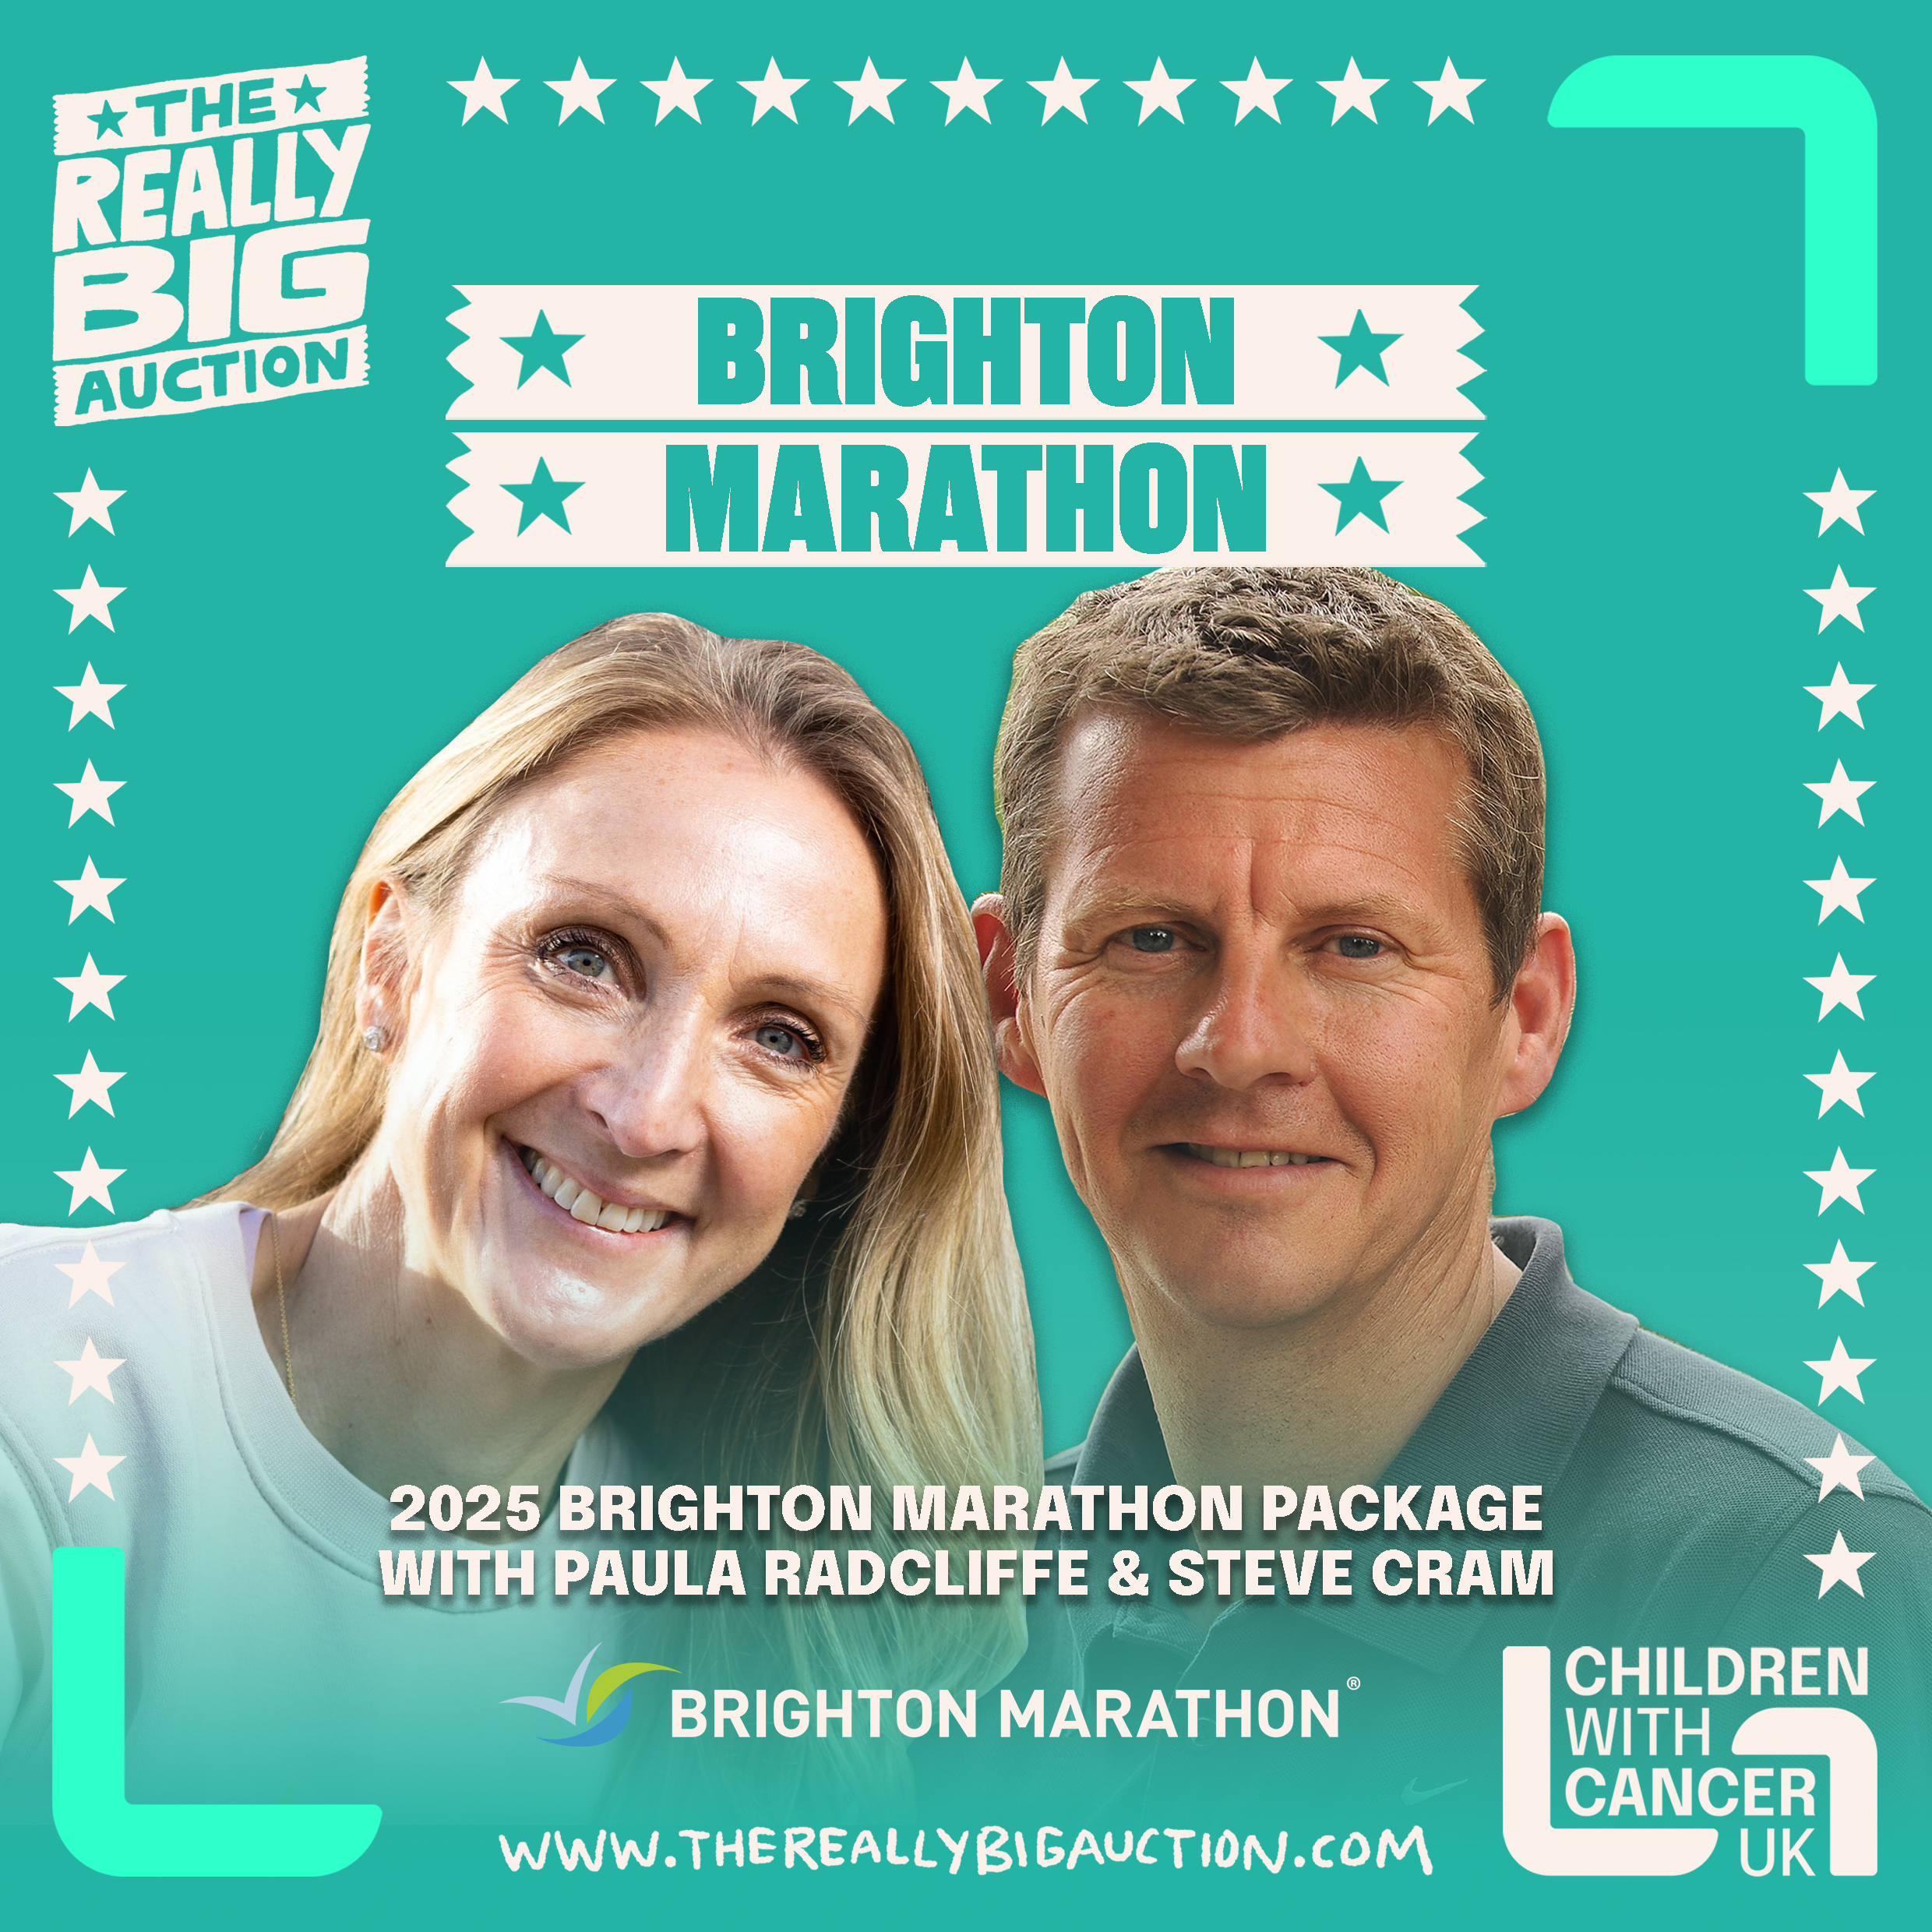 Brighton Marathon really big auction